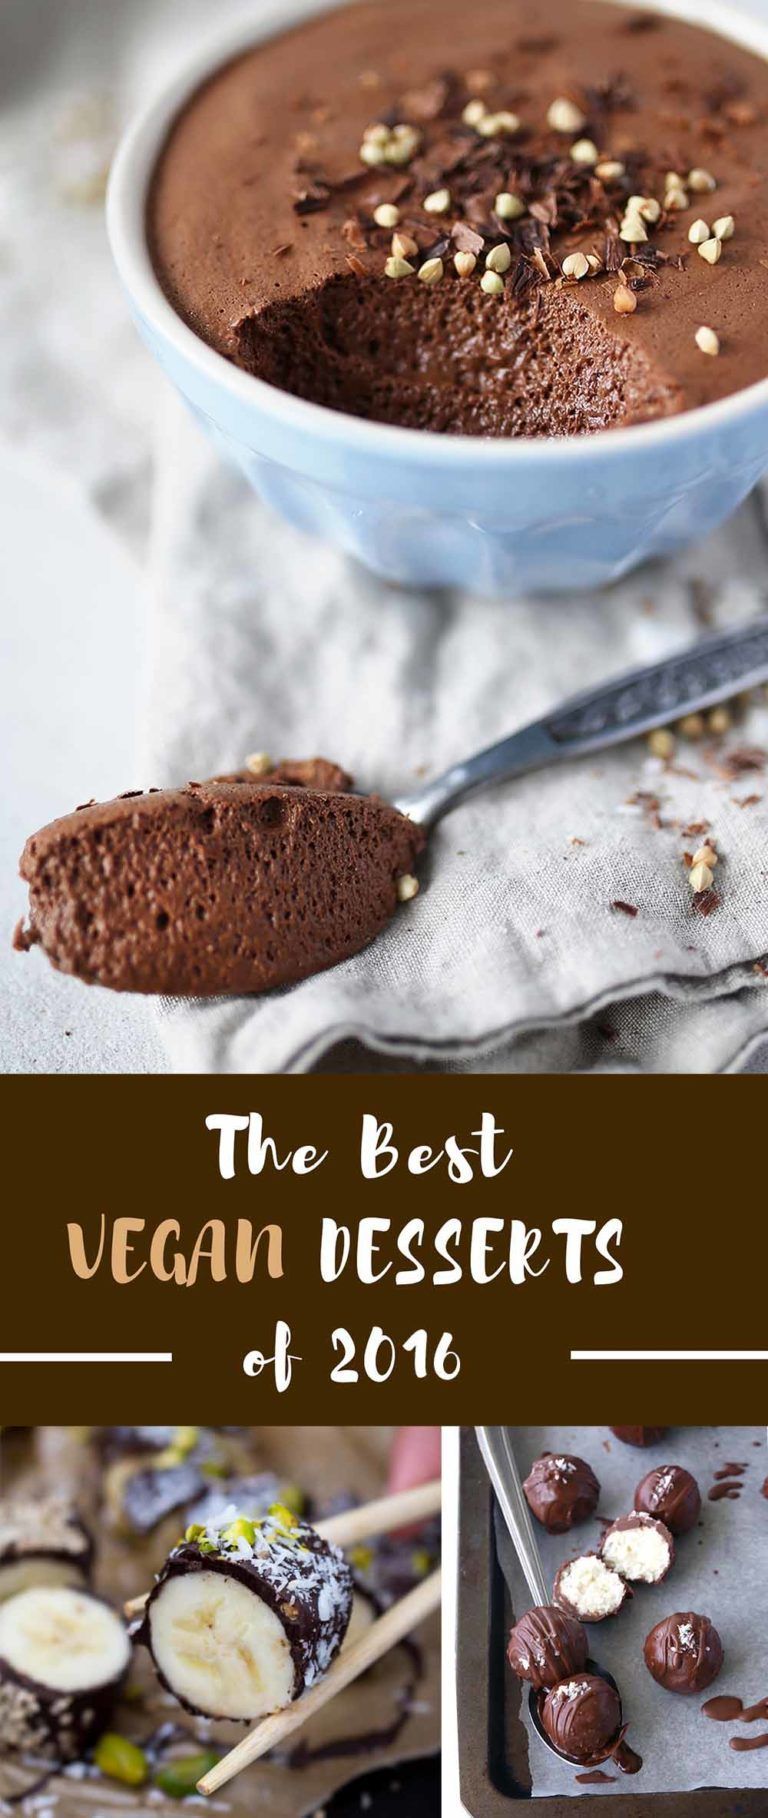 The 20 best vegan healthy desserts and snacks of 2016 -   18 diet desserts vegan
 ideas